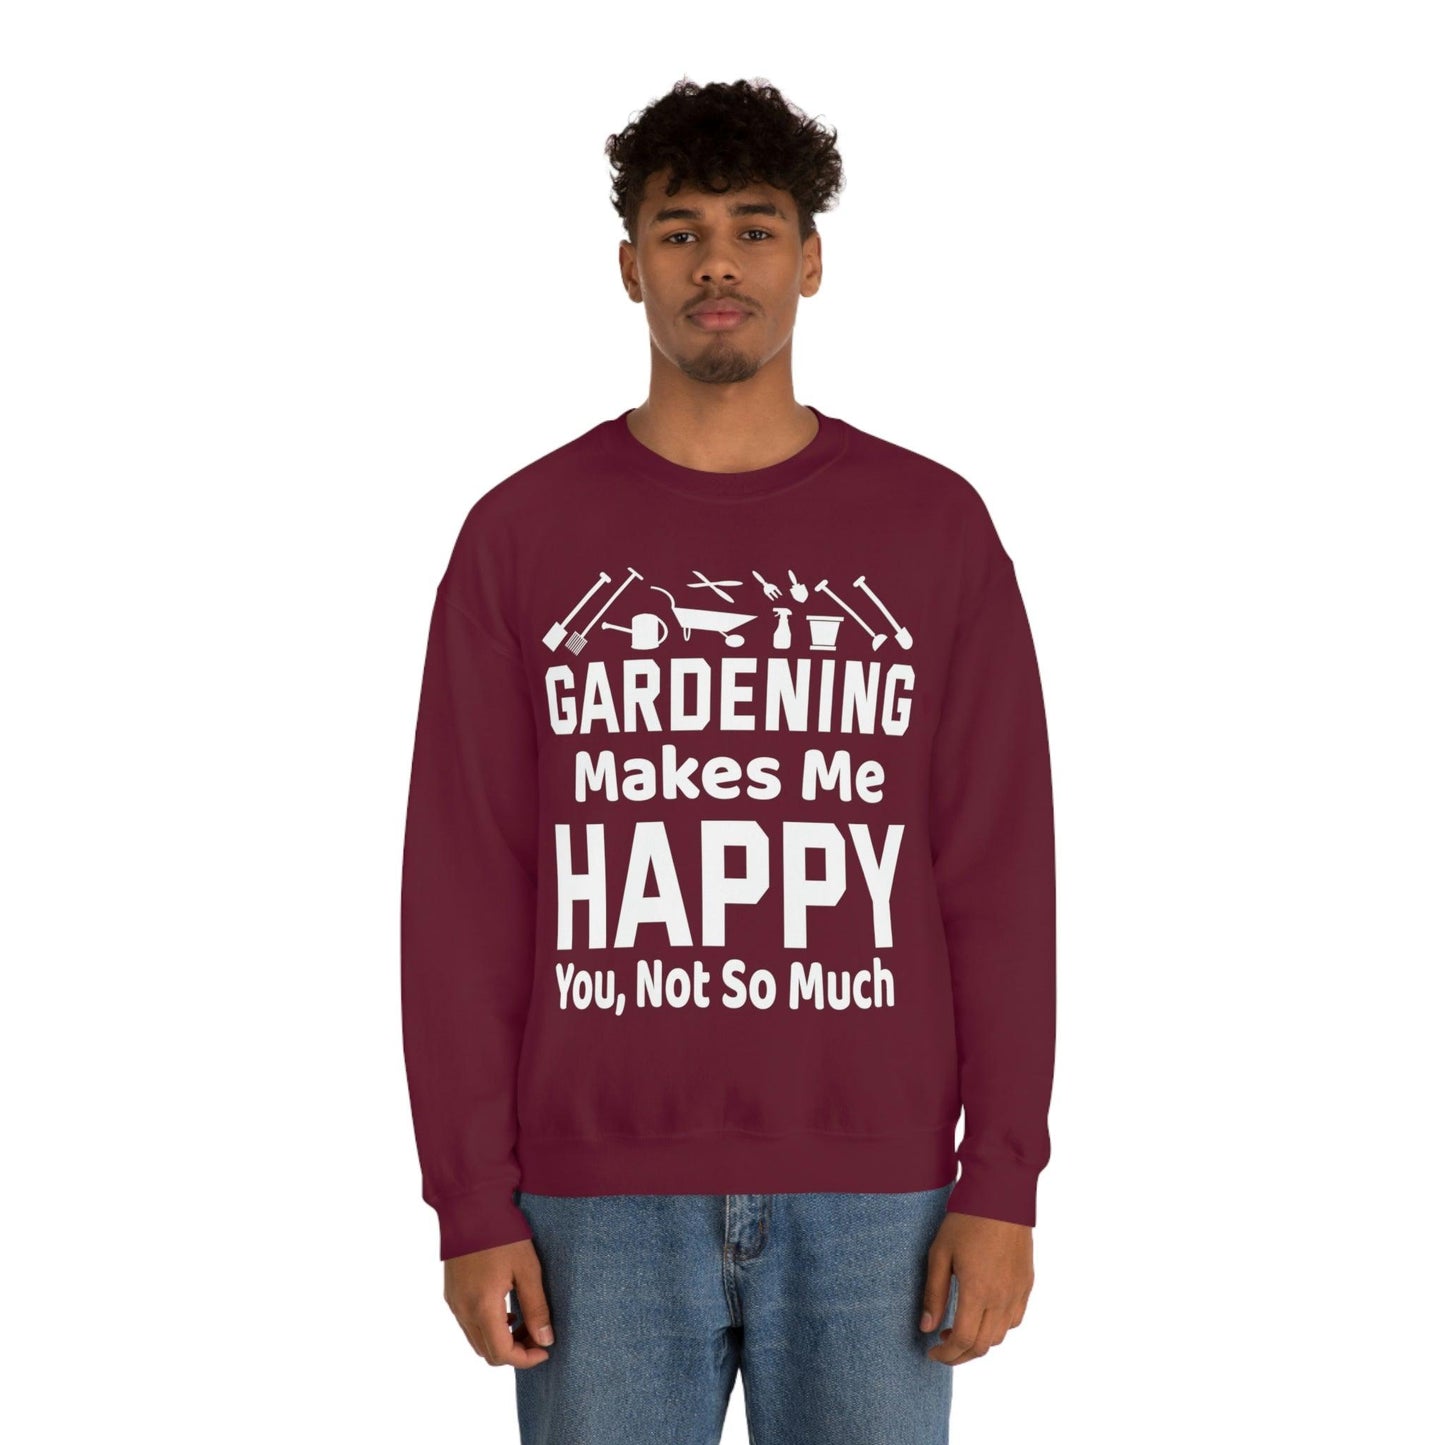 Gardening makes me Happy, You not so much, Garden sweatshirt, great for gardeners, garden shirt, plant lover shirt, nature lover shirt